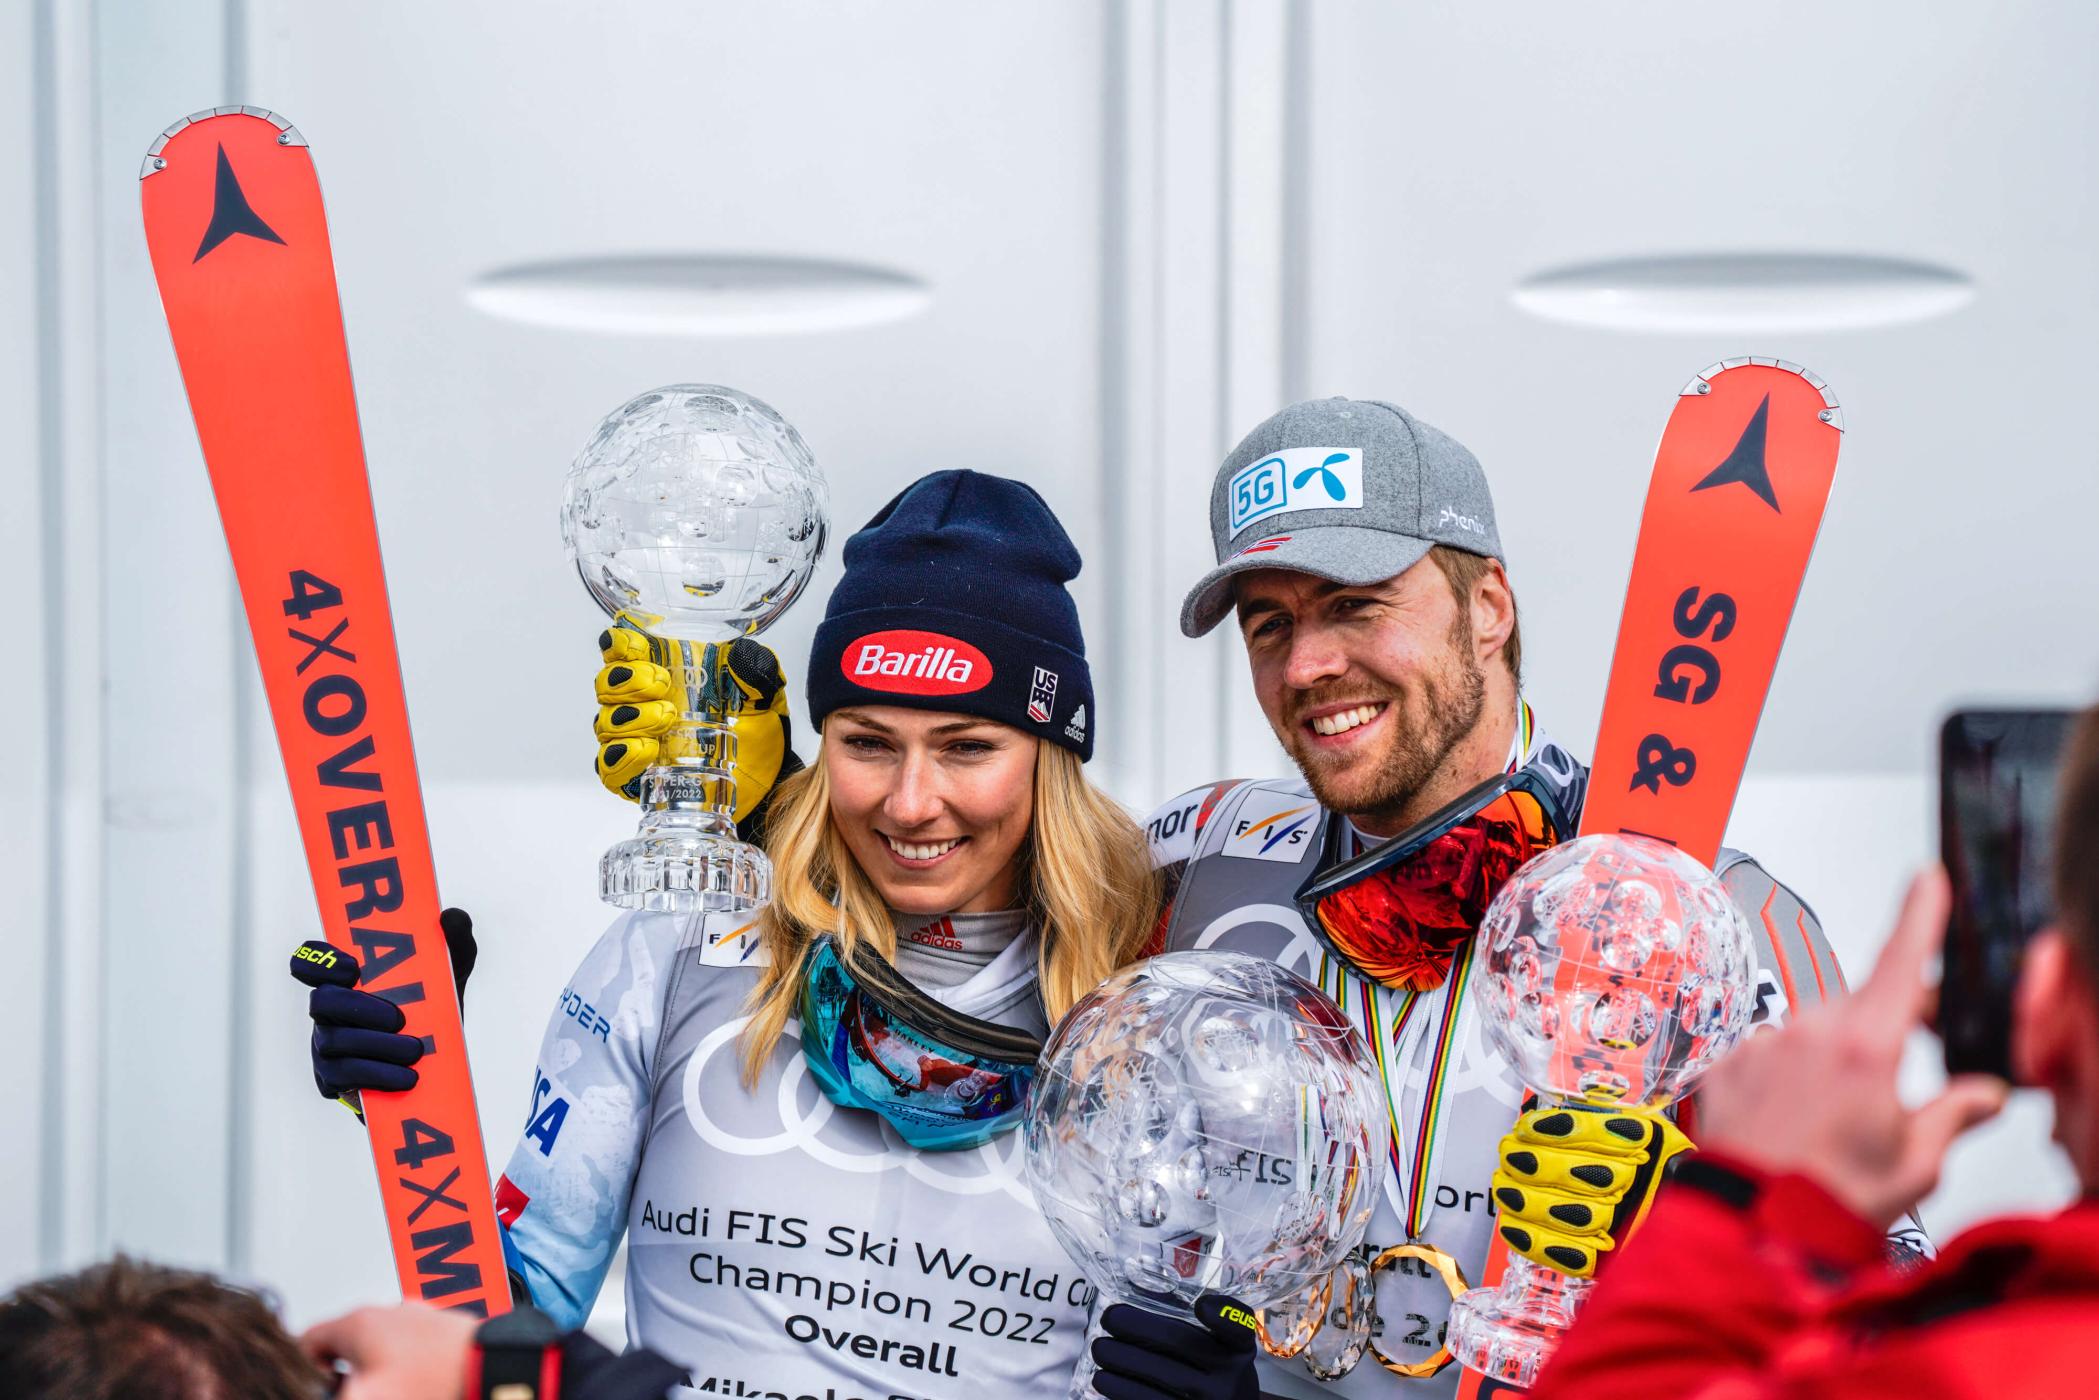 Skifahrer-Paar: Mikaela Shiffrin mit ihrem Partner Aleksander Aamodt Kilde